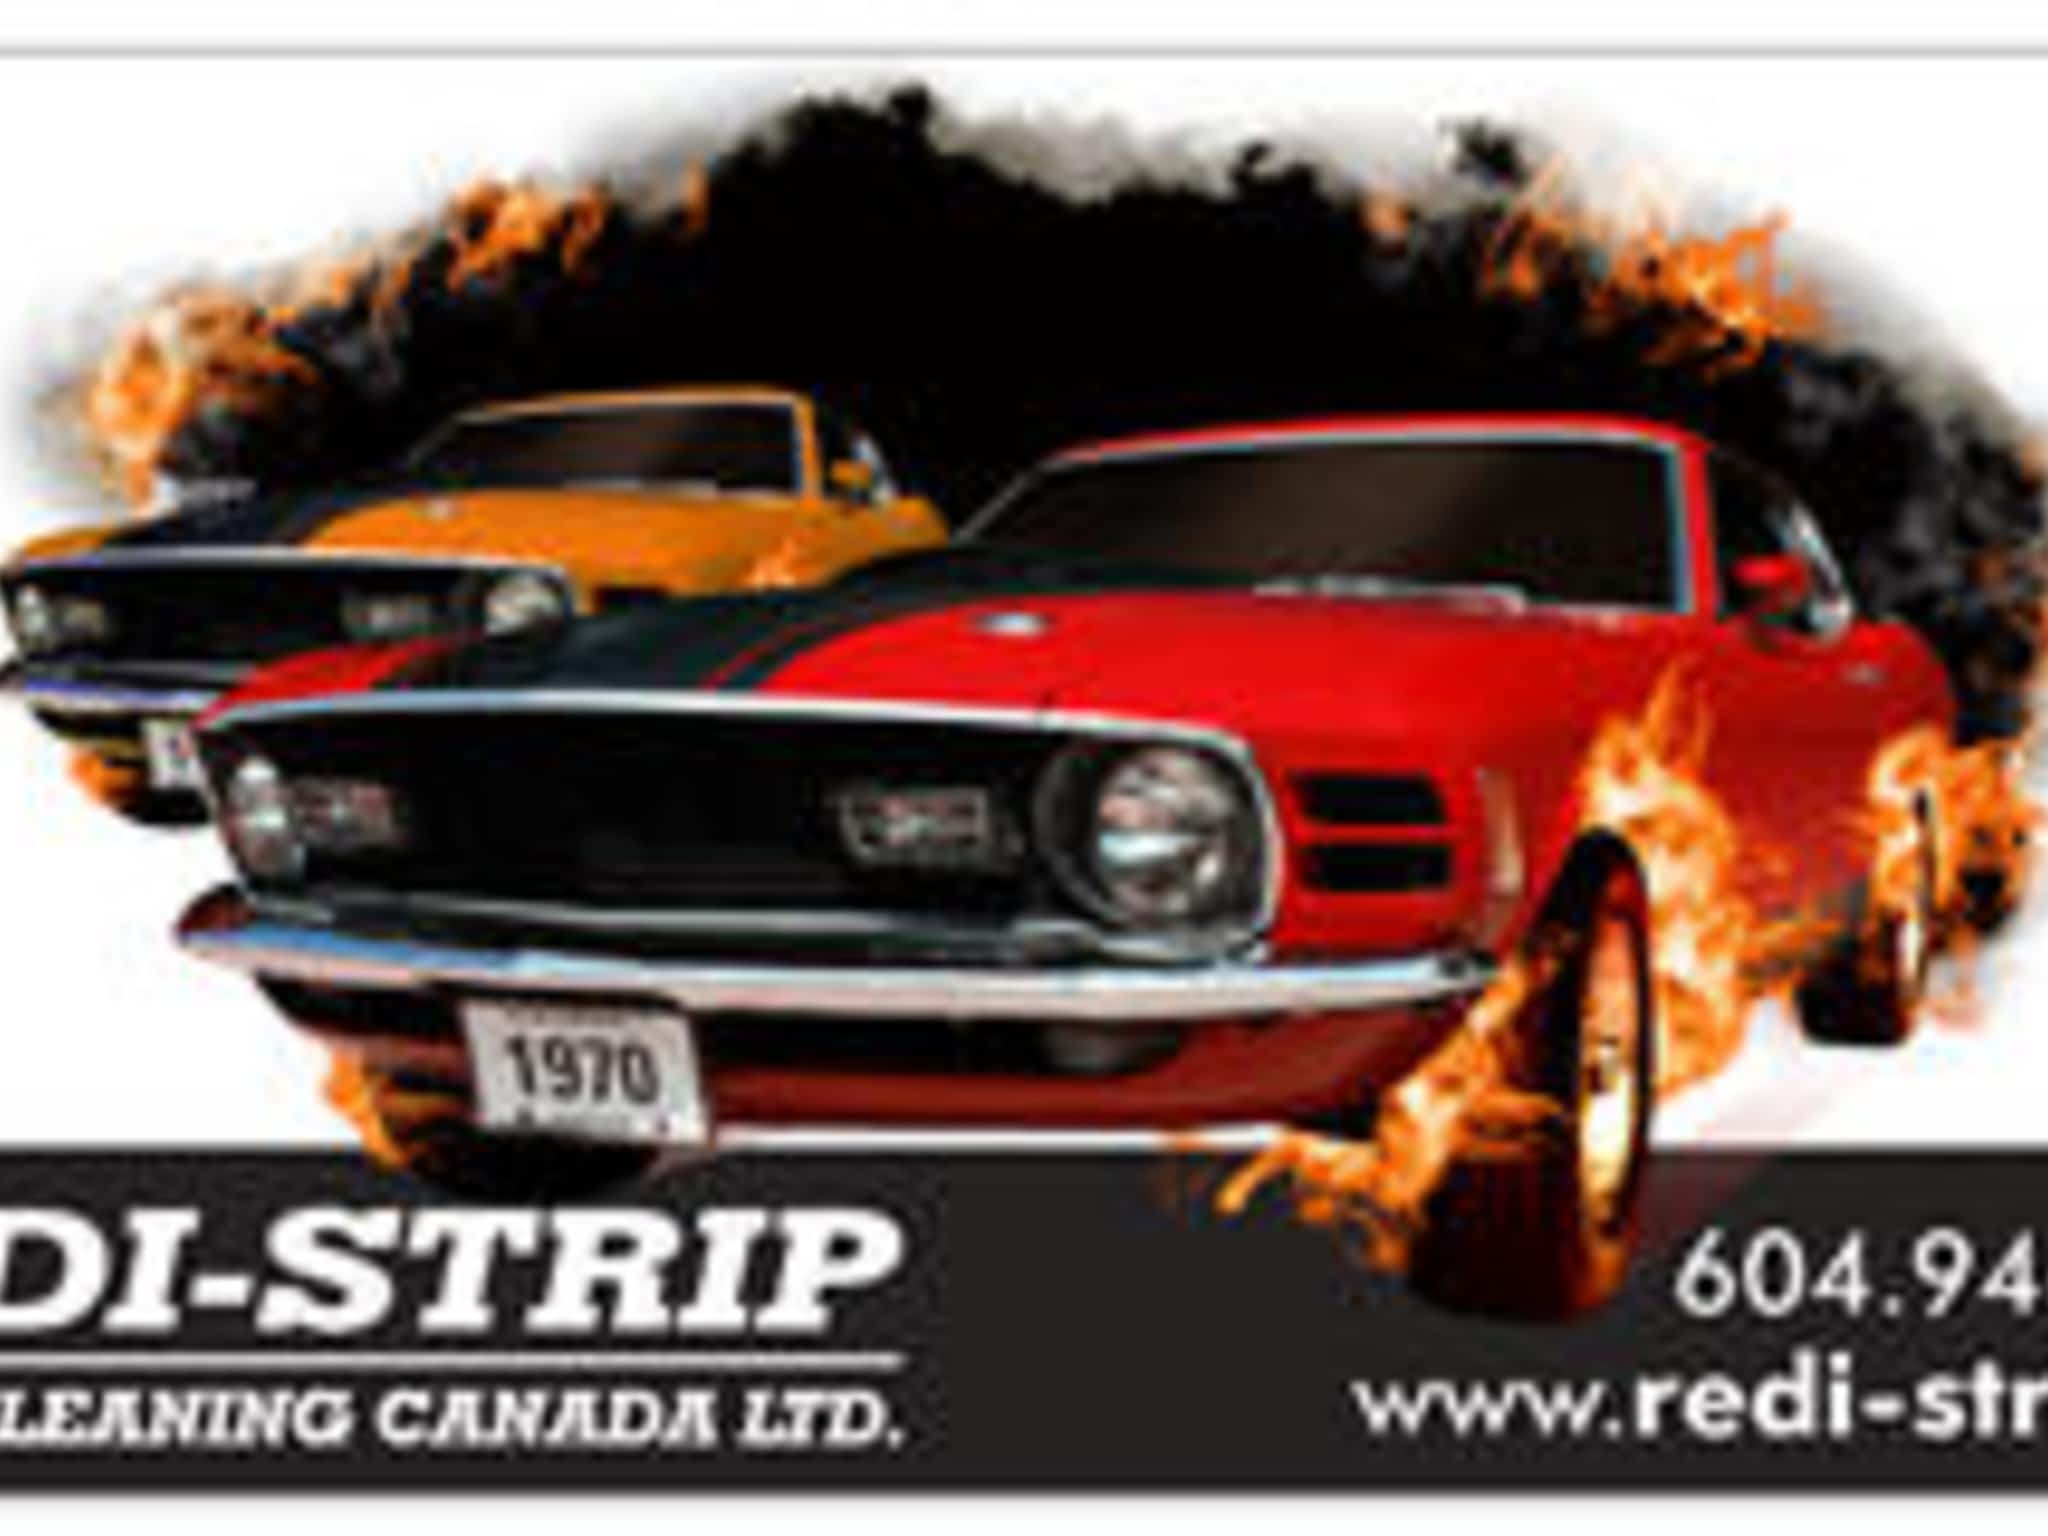 photo Redi-Strip Metal Cleaning Canada Ltd